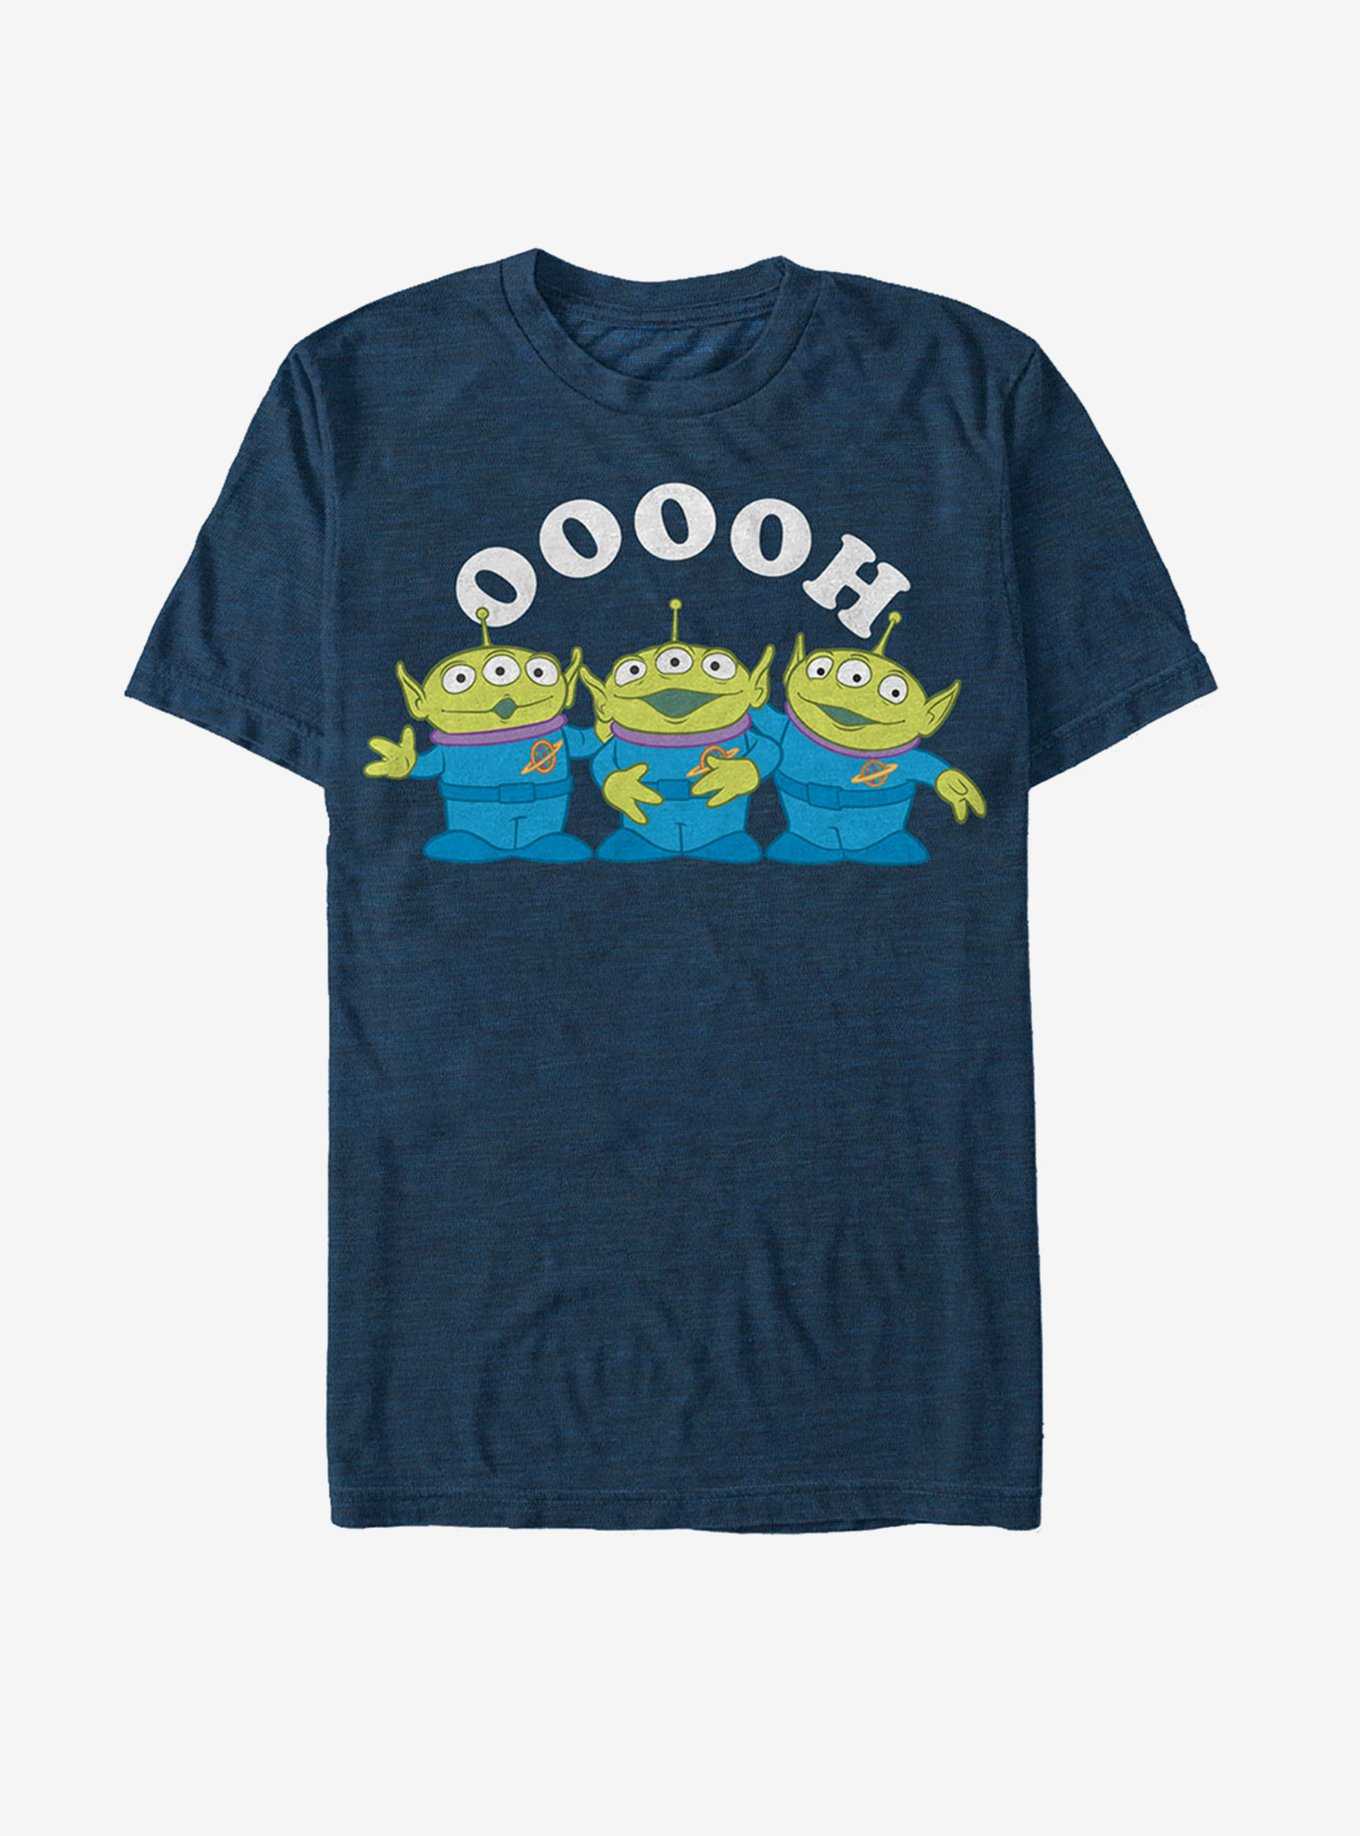 Disney Pixar Toy Story Oooh Squeeze Aliens T-Shirt, , hi-res